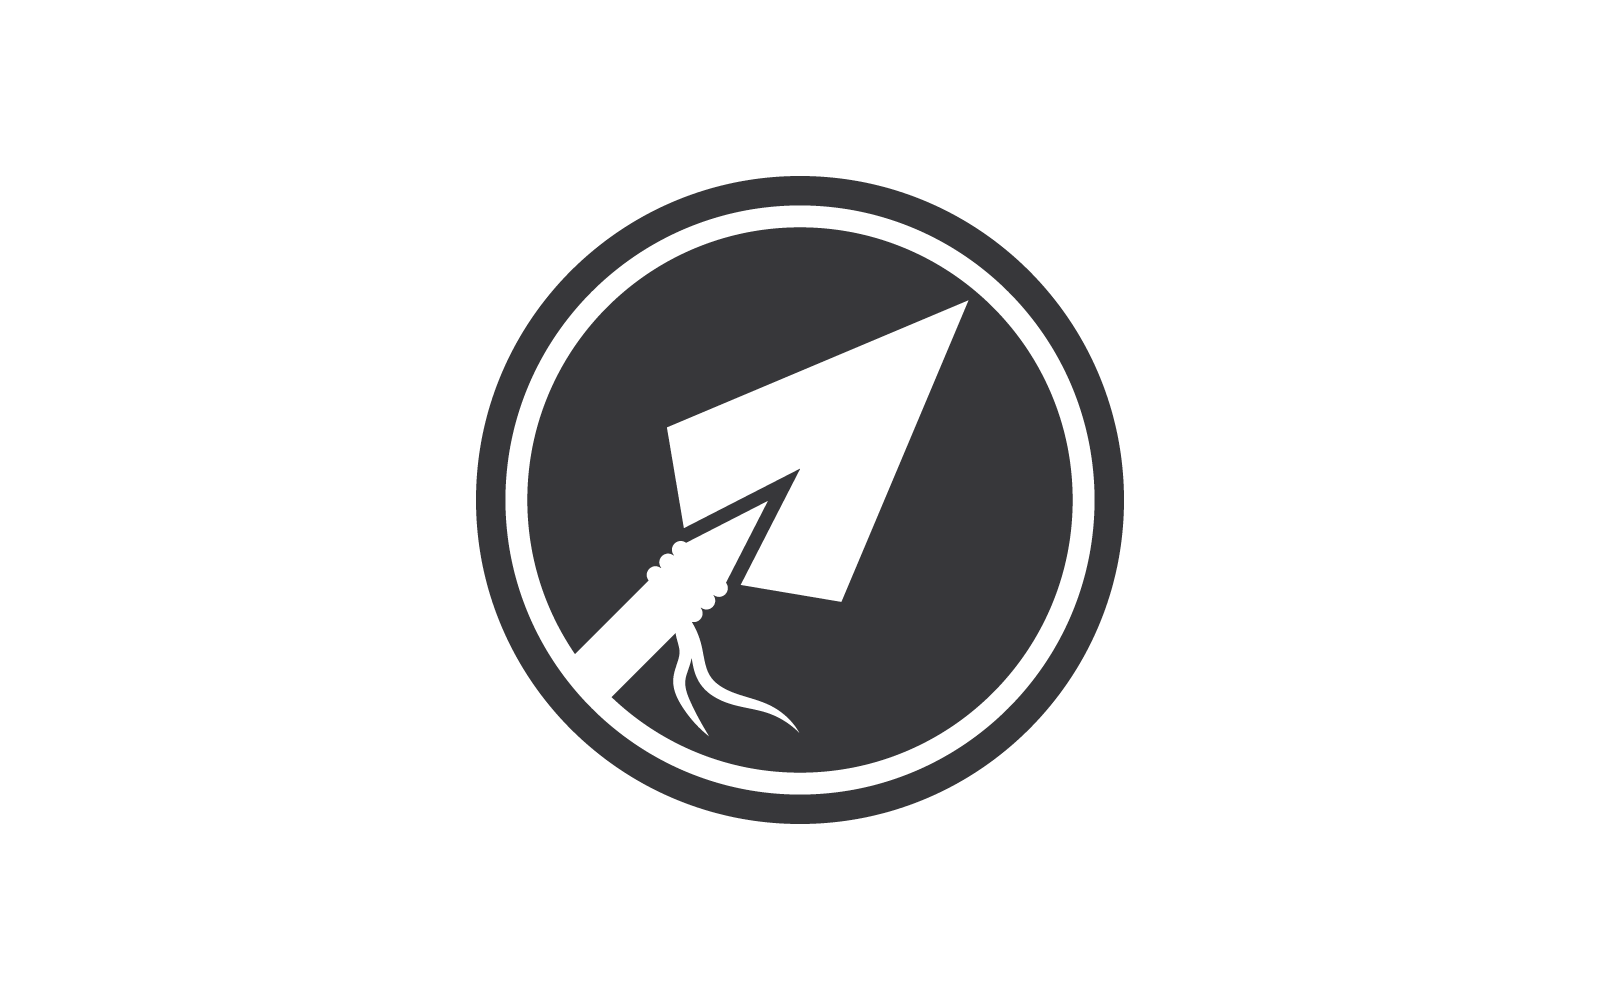 Spear logo and symbol vector flat design